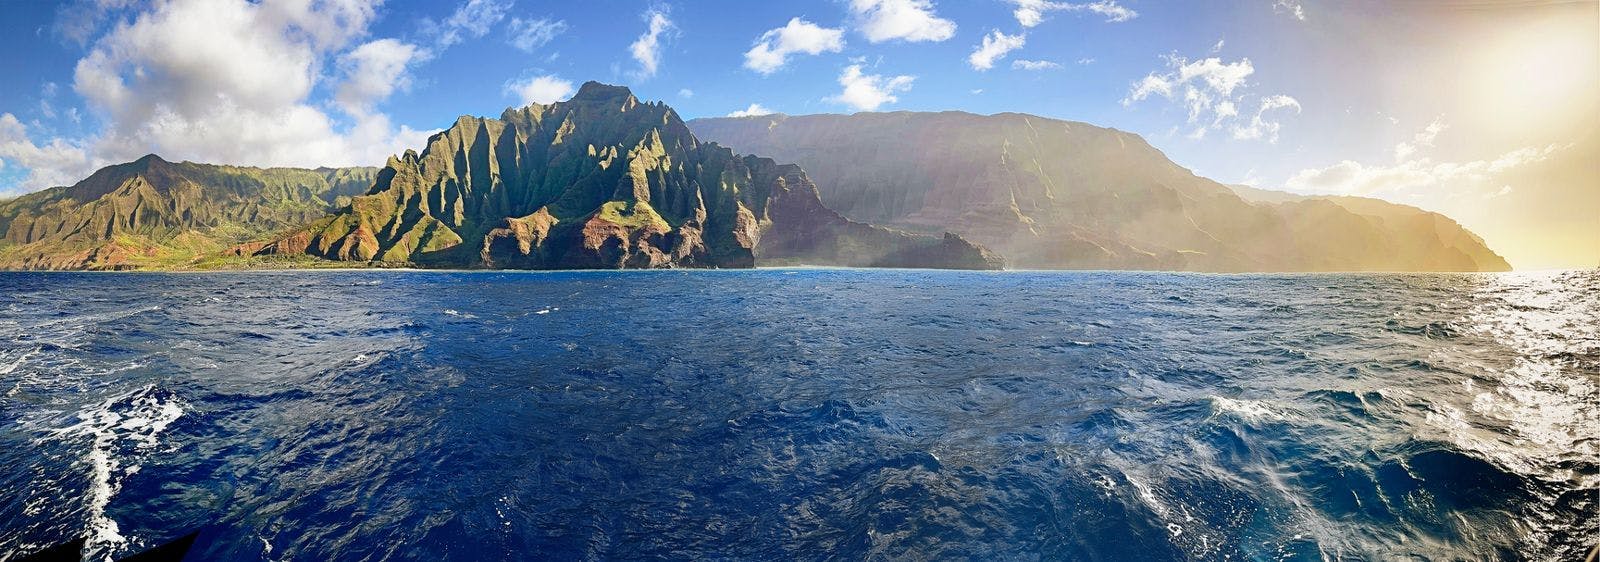 View of Hawaiian coastline from the sea